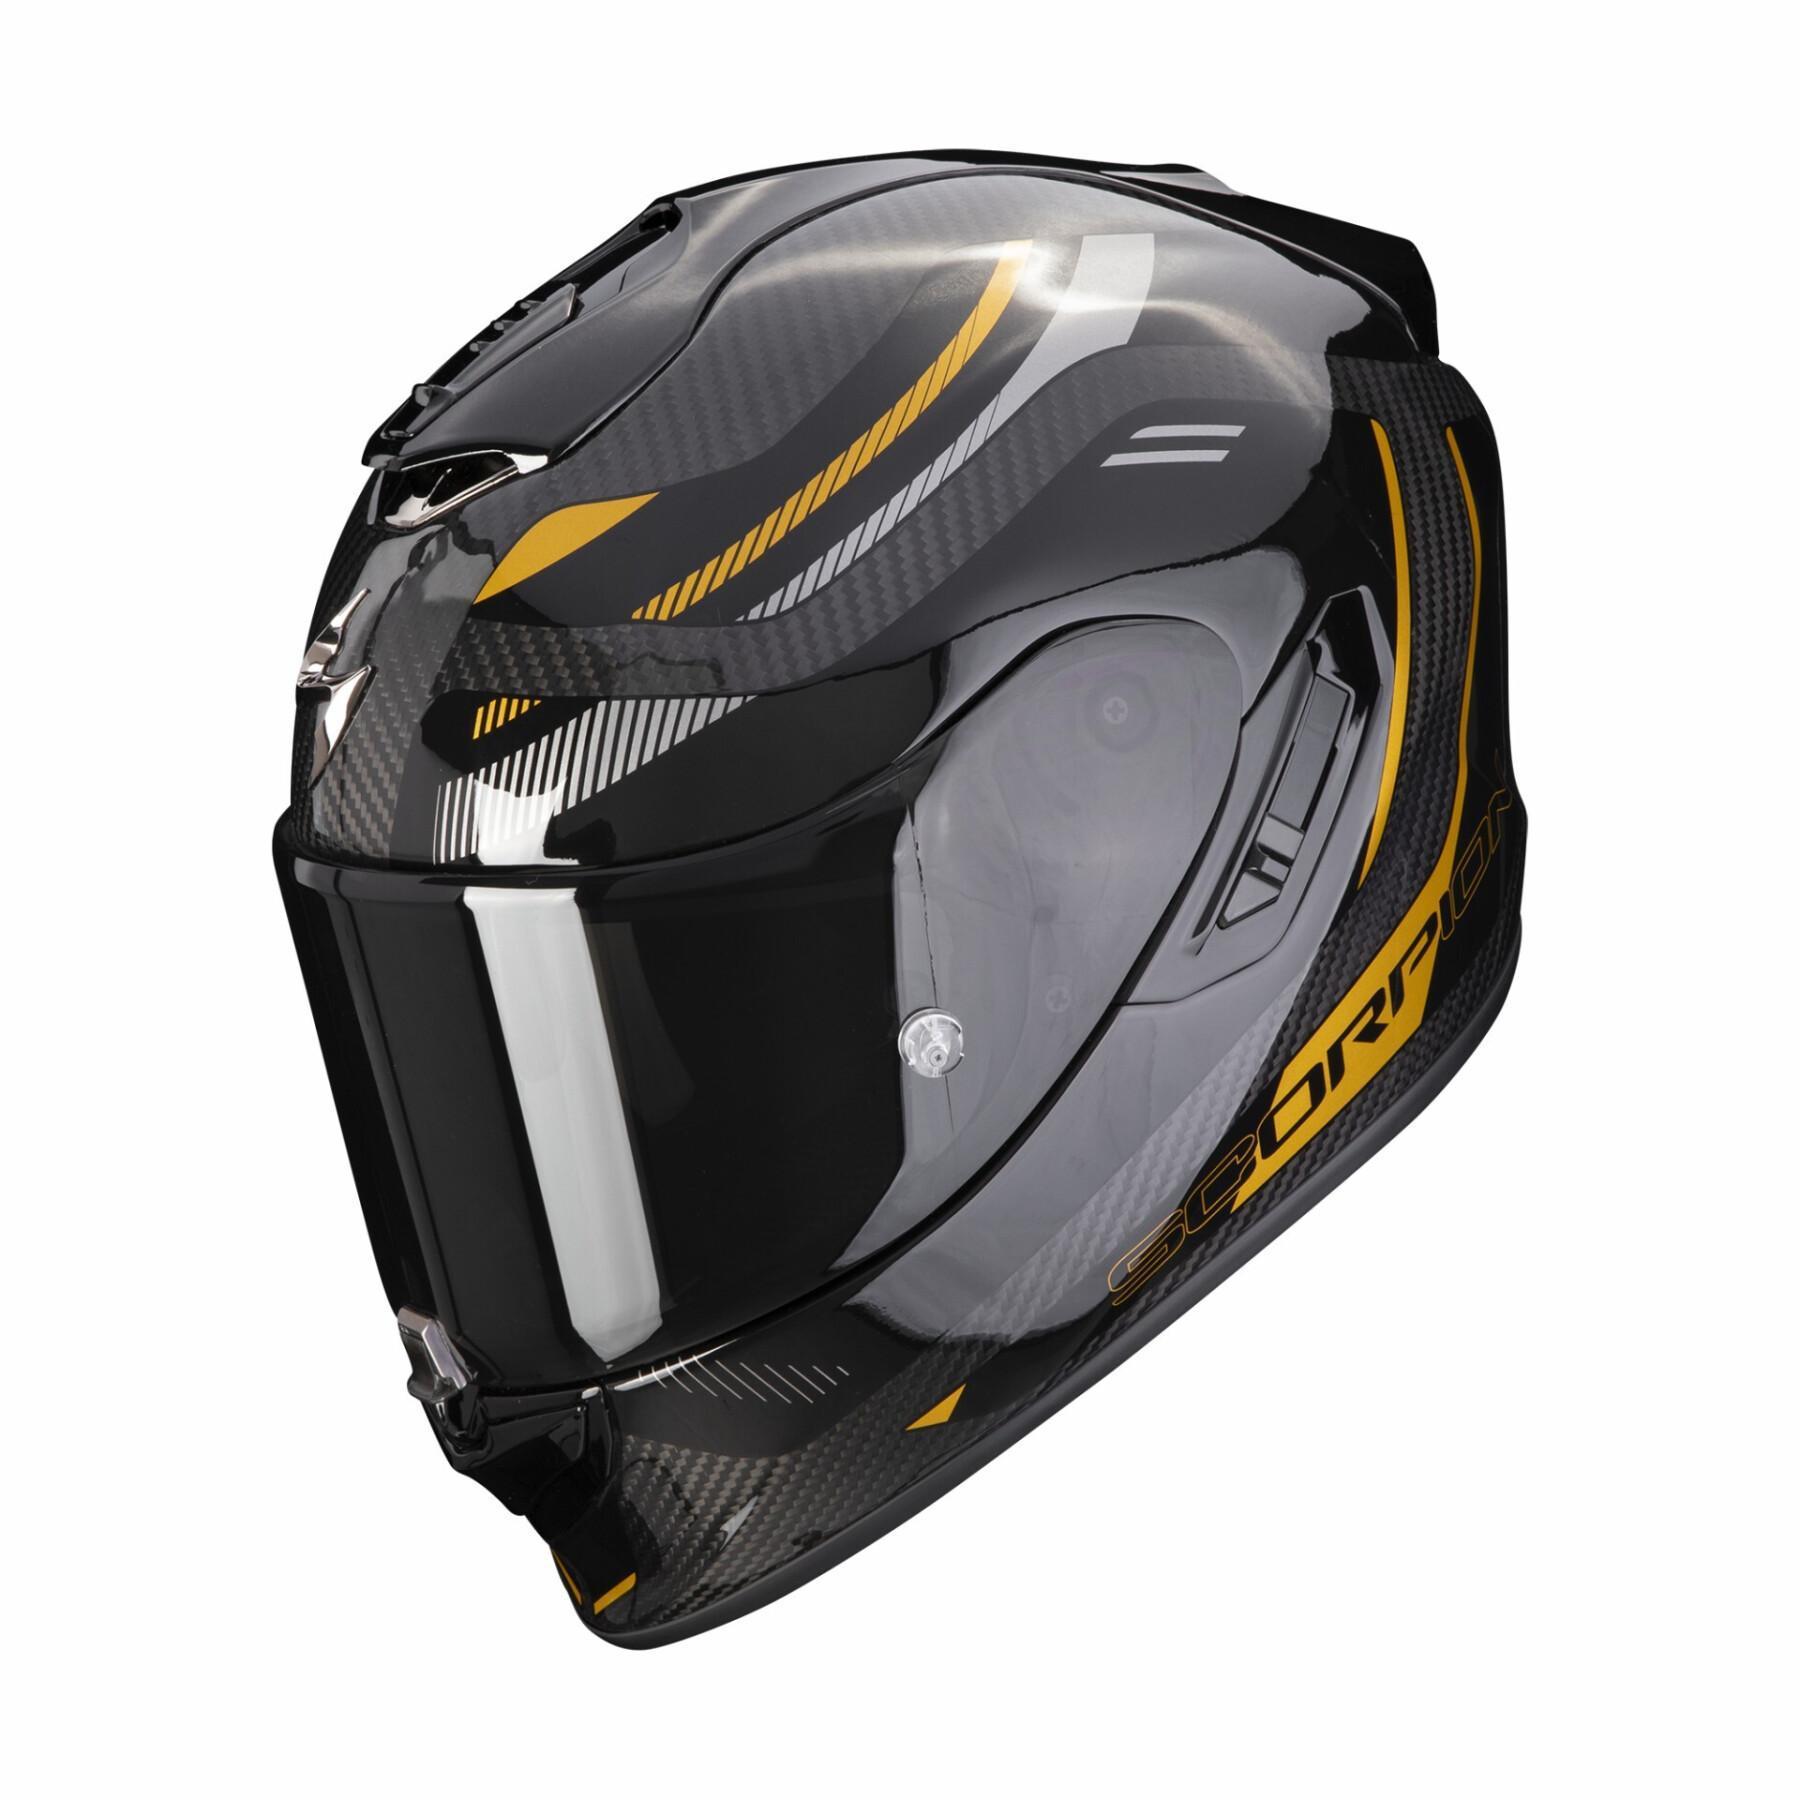 Full face motorcycle helmet Scorpion Exo-1400 Evo Carbon Air Kydra ECE 22-06